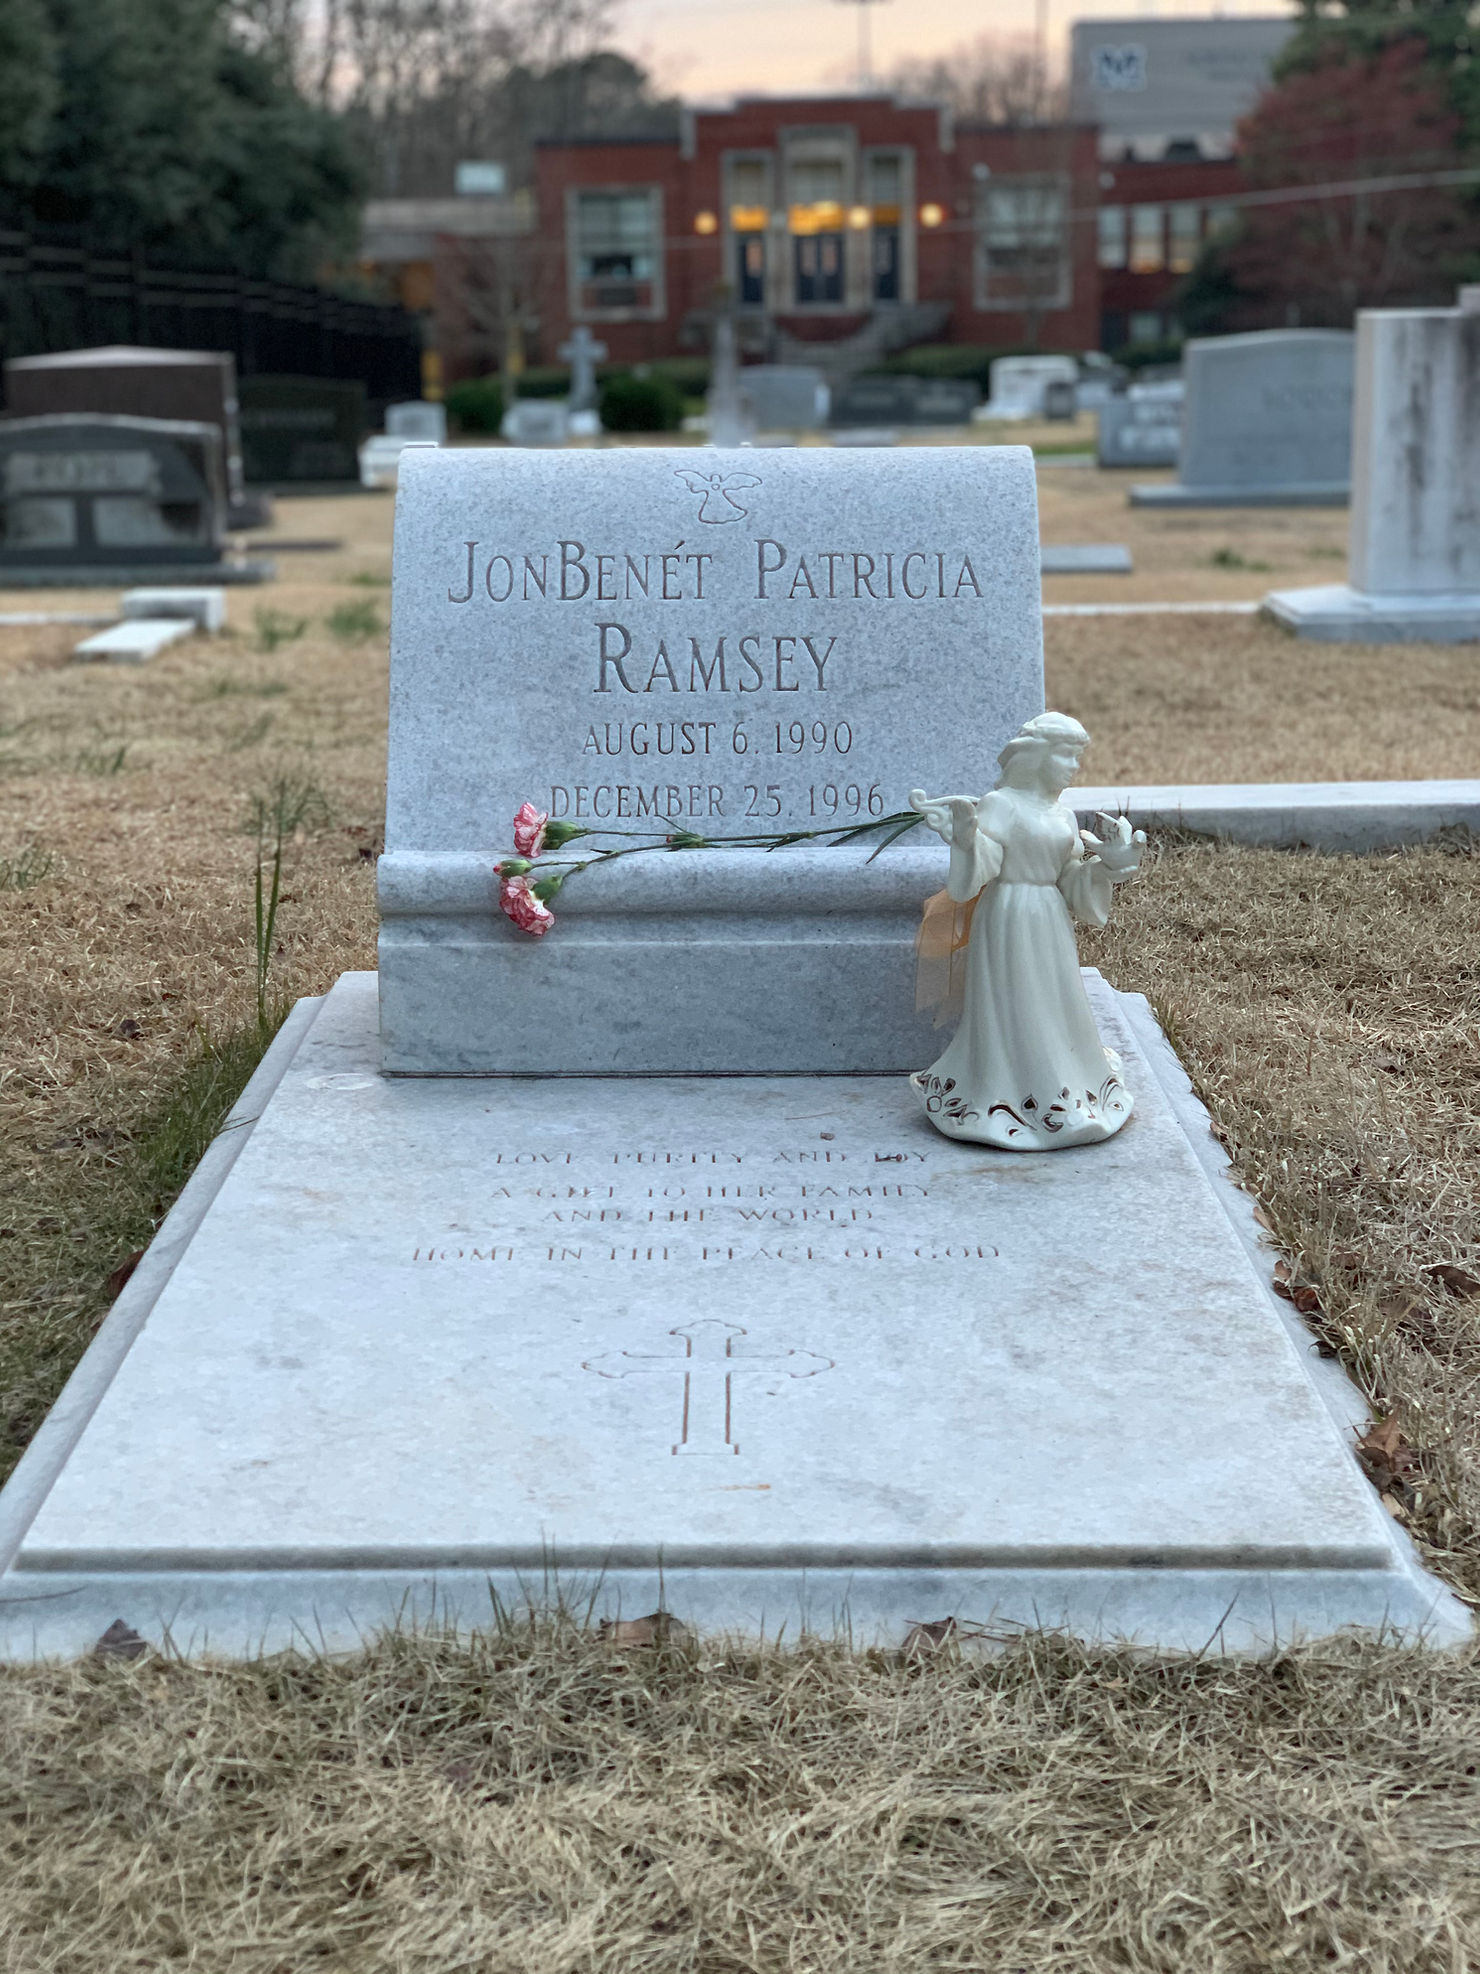 JonBenet Ramsey's grave located in Marietta, Georgia